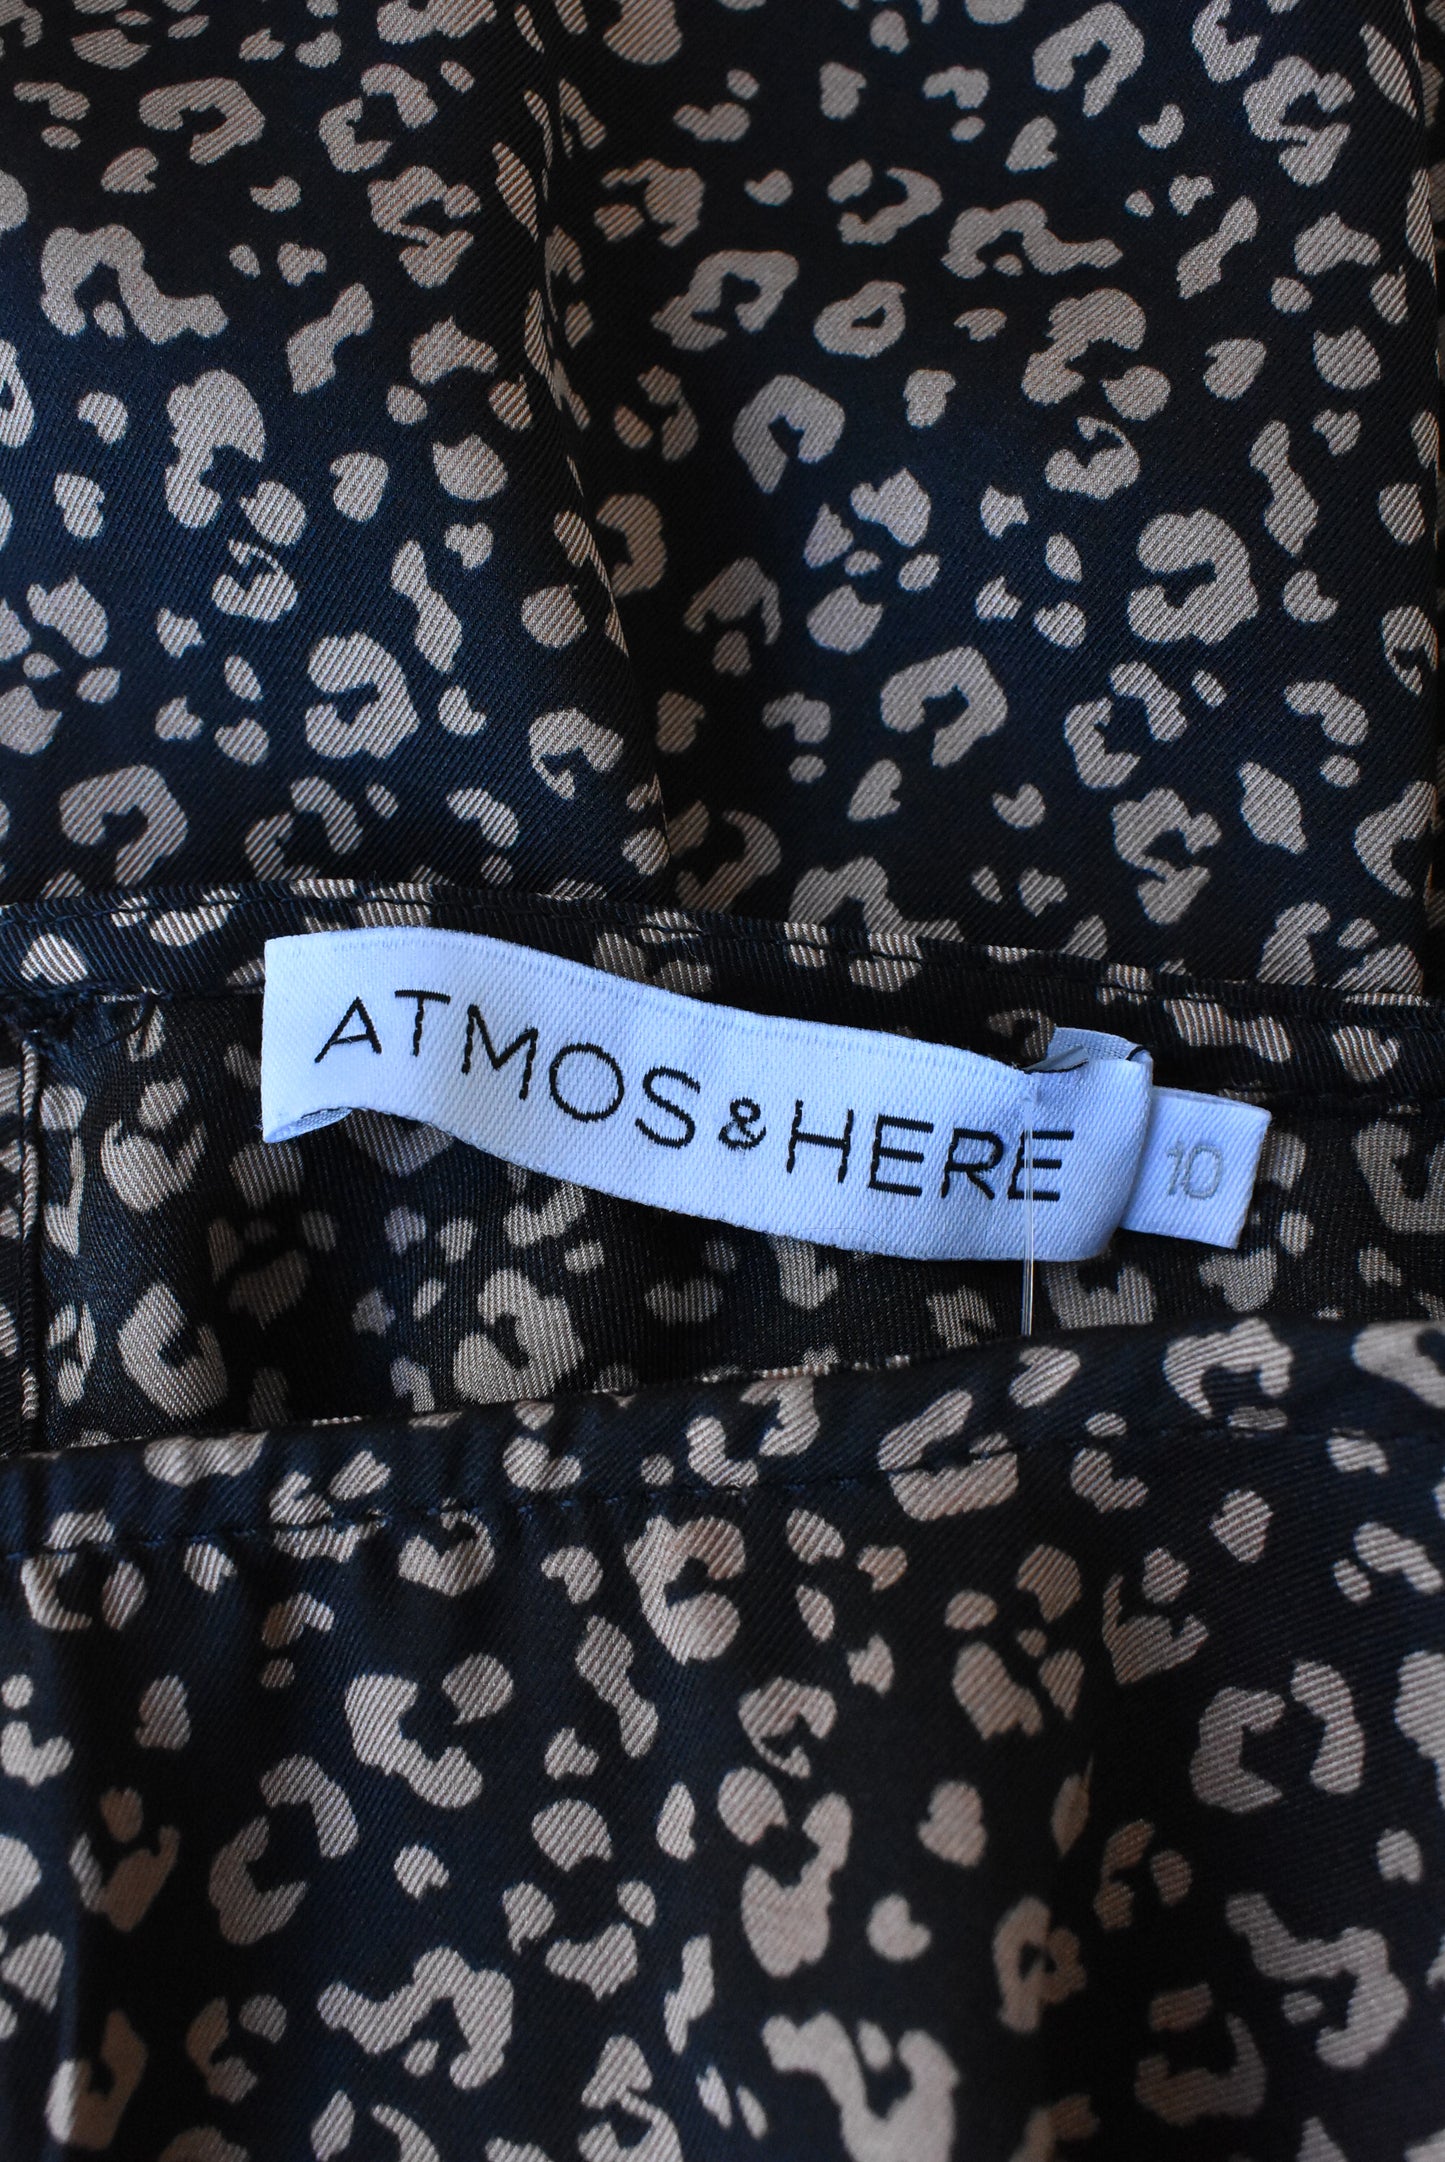 Atmos & Here animal-ish print babydoll style dress, 10